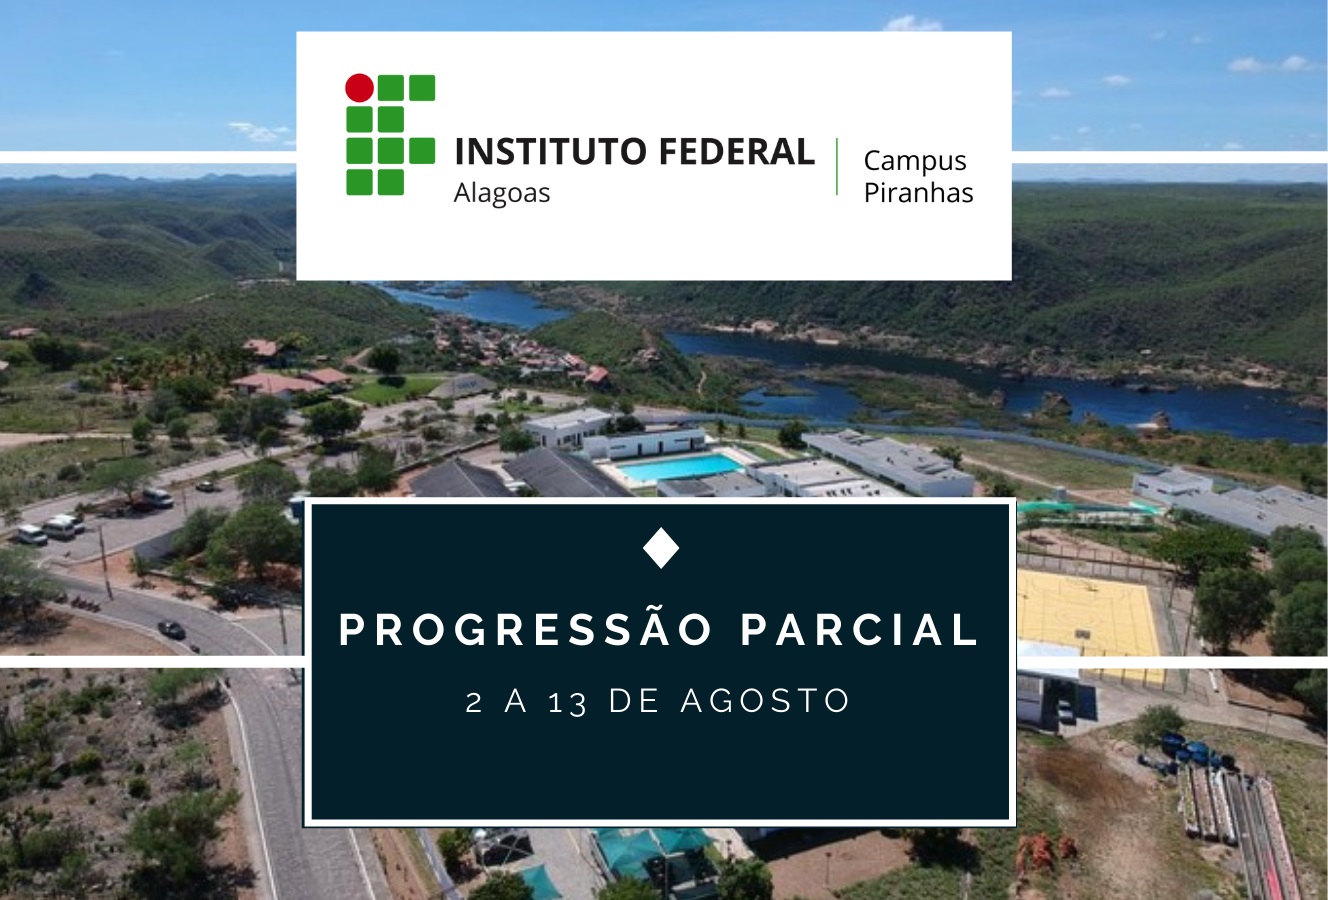 Progressão Parcial - Campus Piranhas.jpg